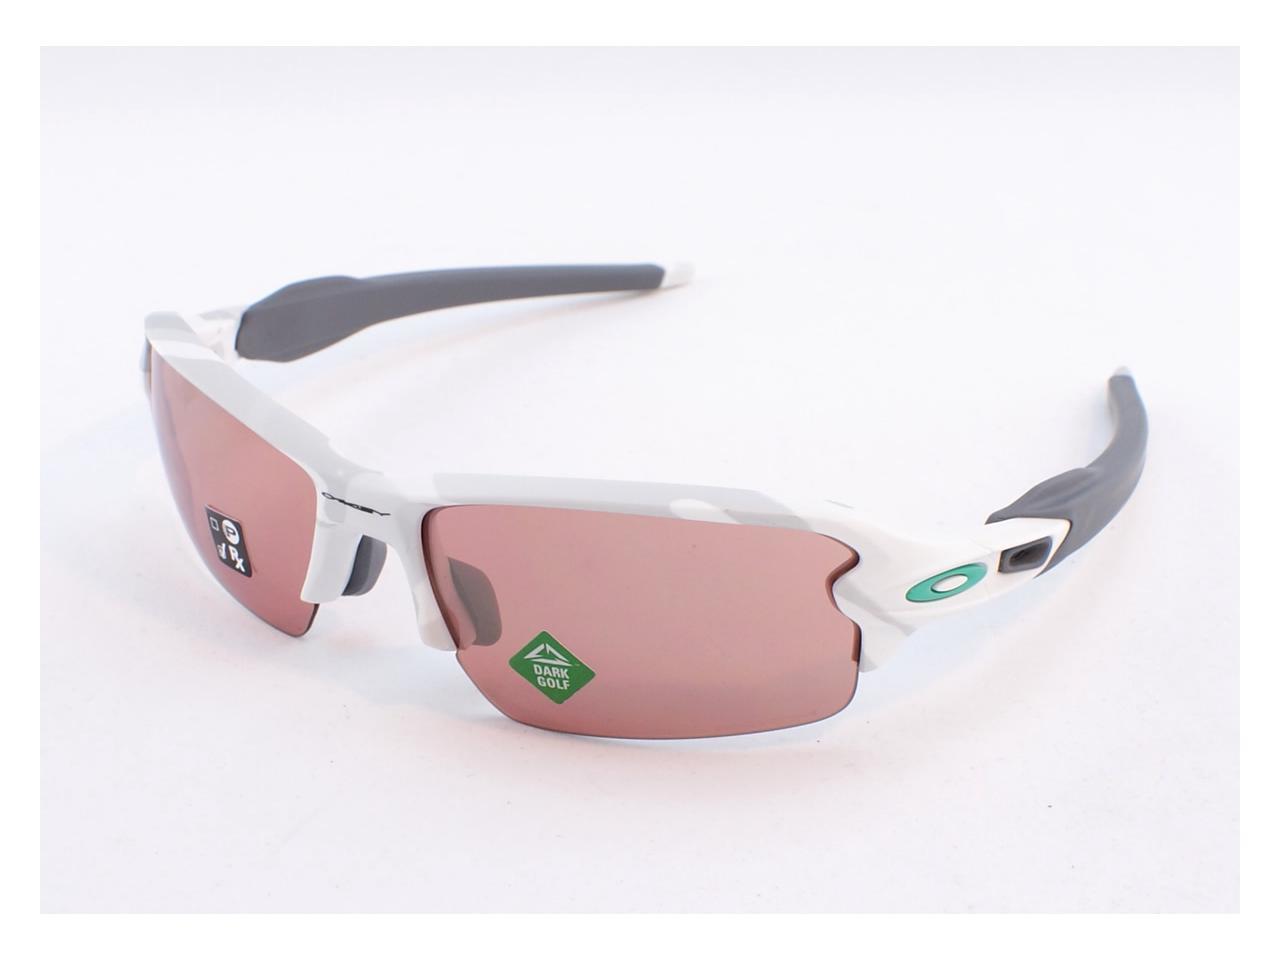 oakley alpine sunglasses